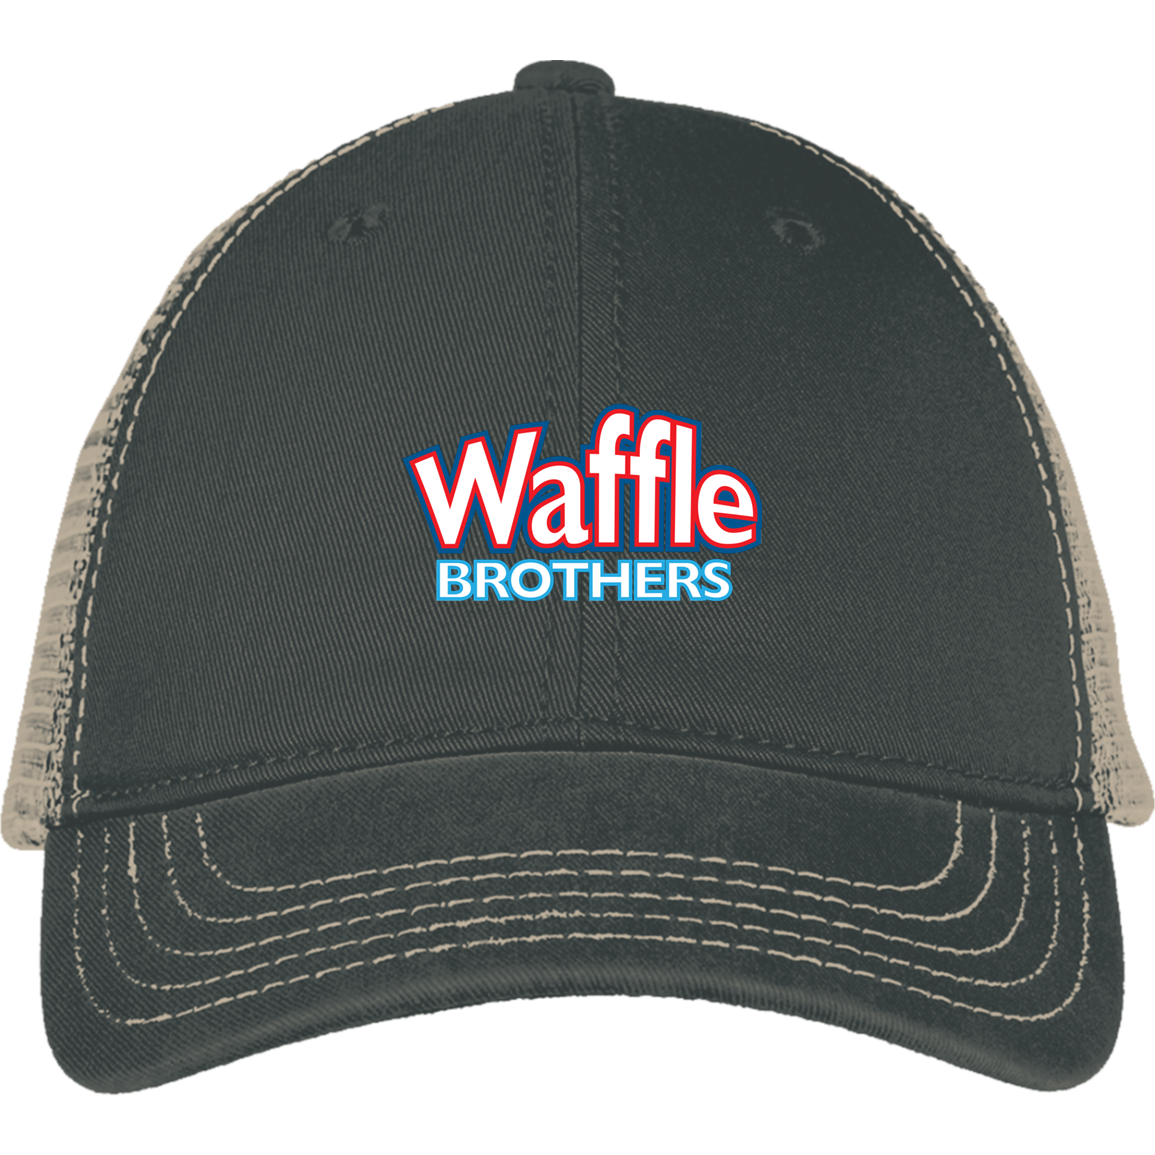 Waffle Brothers Mesh Back Cap